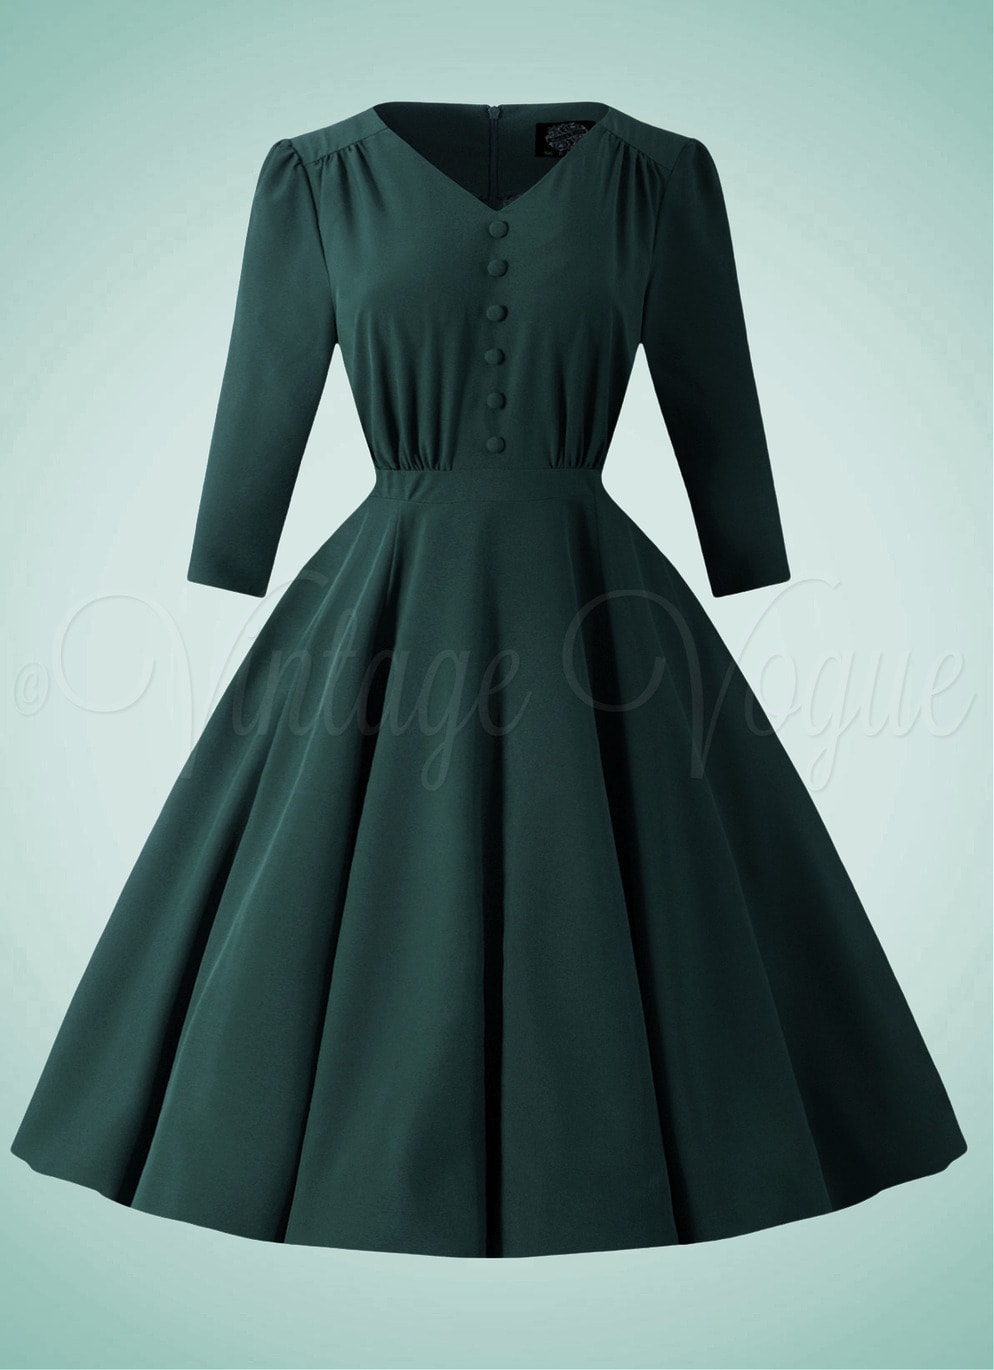 Forever Fifties 50's Retro Vintage Winter Kleid Verde Swing Dress in Dunkelgrün Petticoat Damen Damenkleid Winterkleid Langarm lange Ärmel elegant